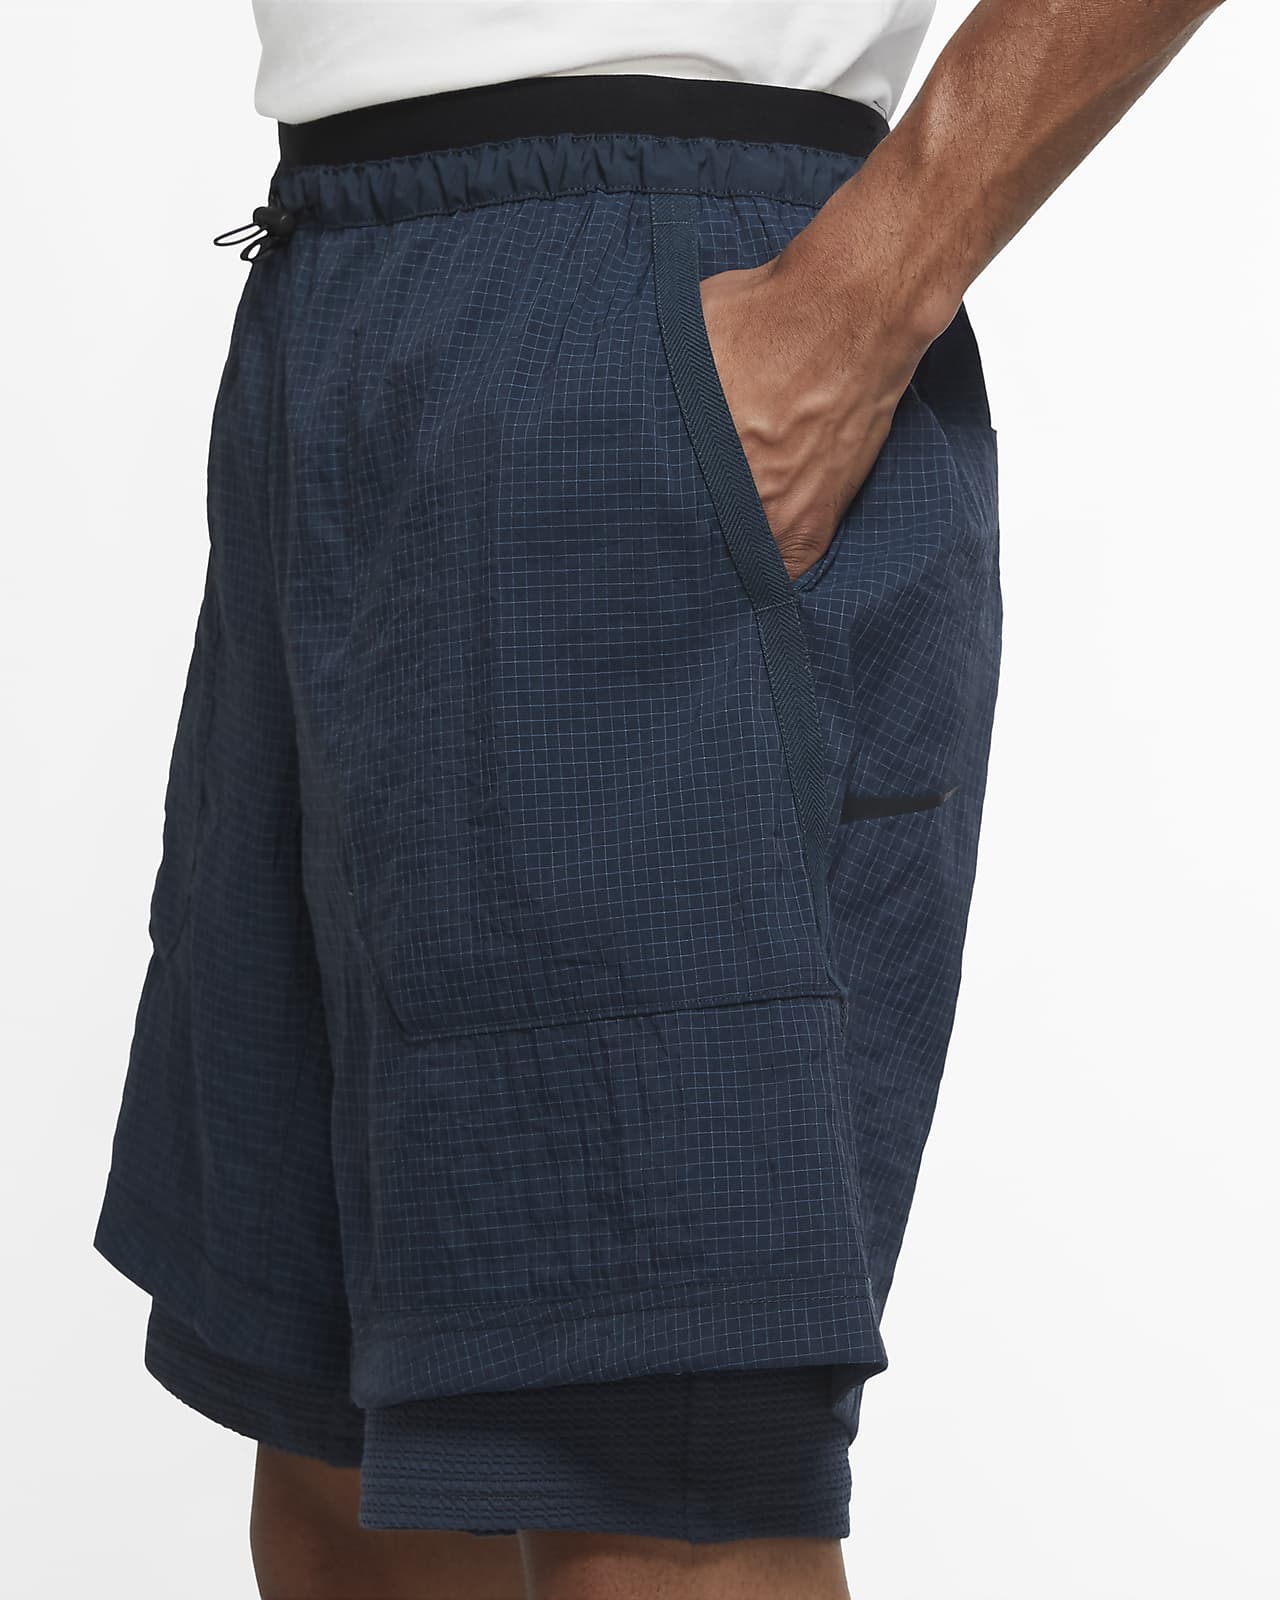 nike flex tech pack men's woven training shorts